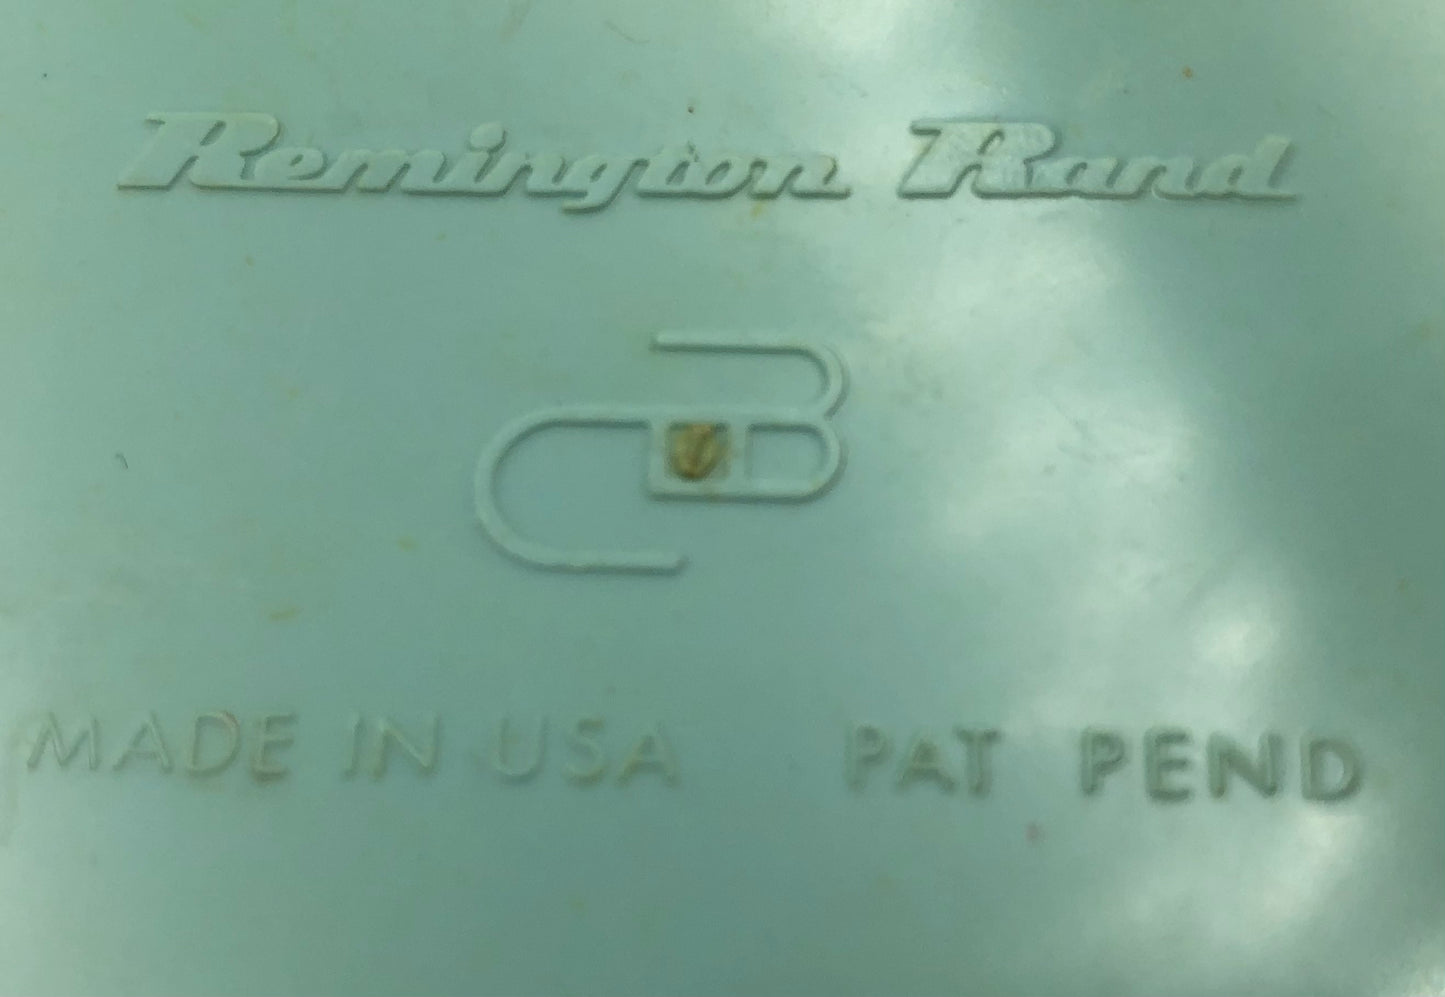 Lady Remington electric shaver